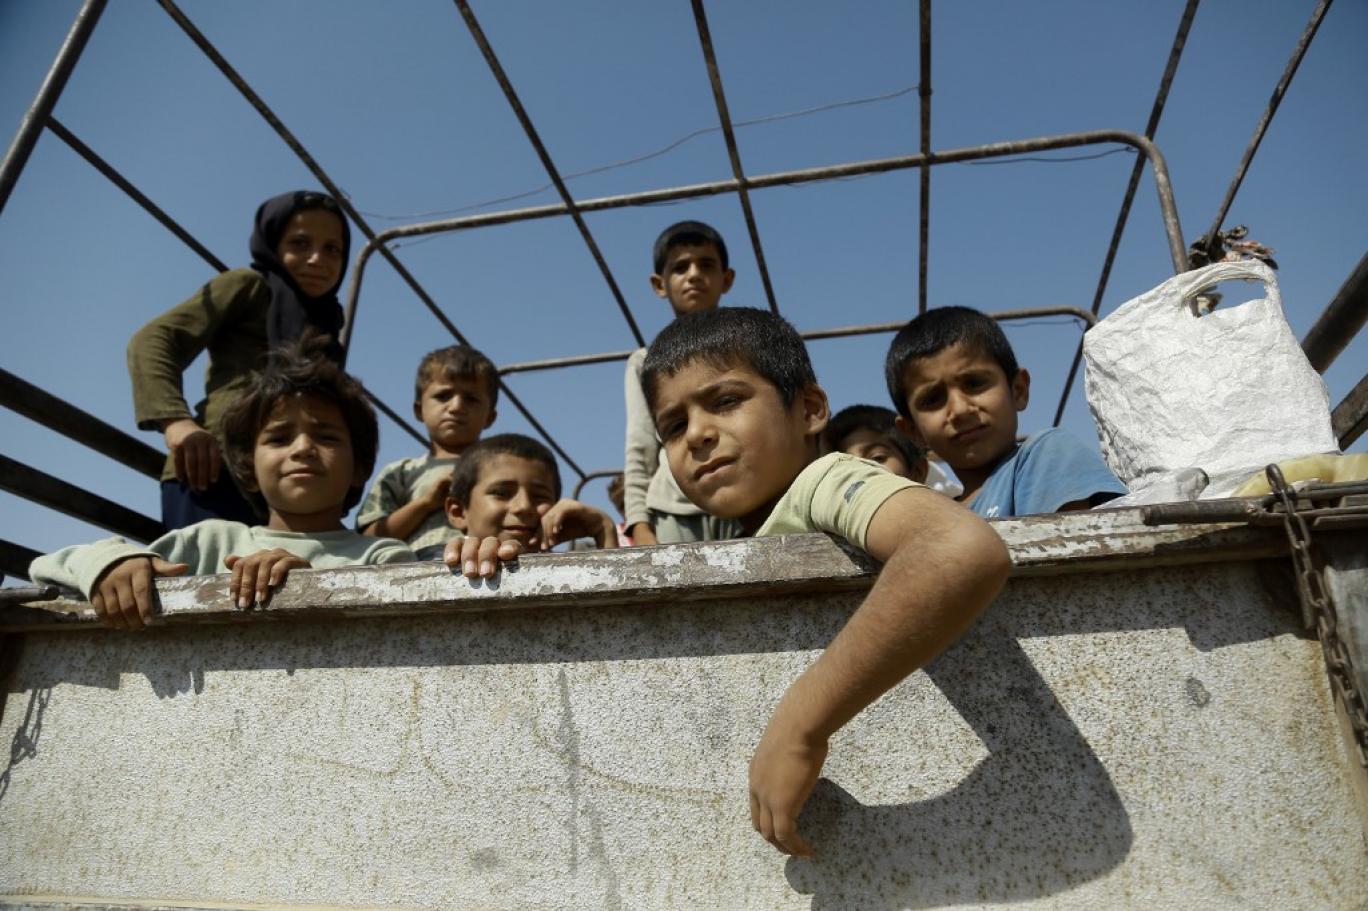 Child labor rises to 160 million, UNICEF says